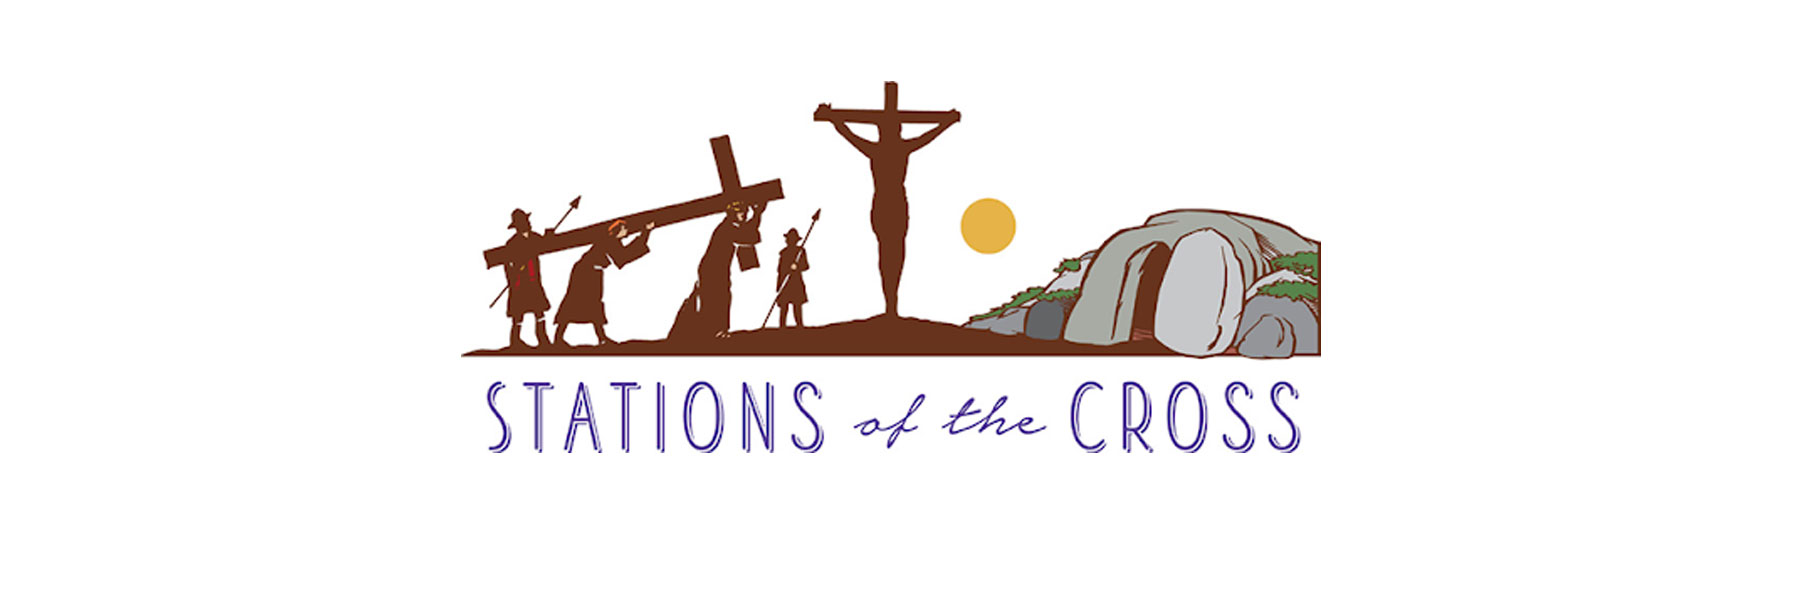 Stations of the Cross at St. John the Baptist Catholic Church - Covington, WA.